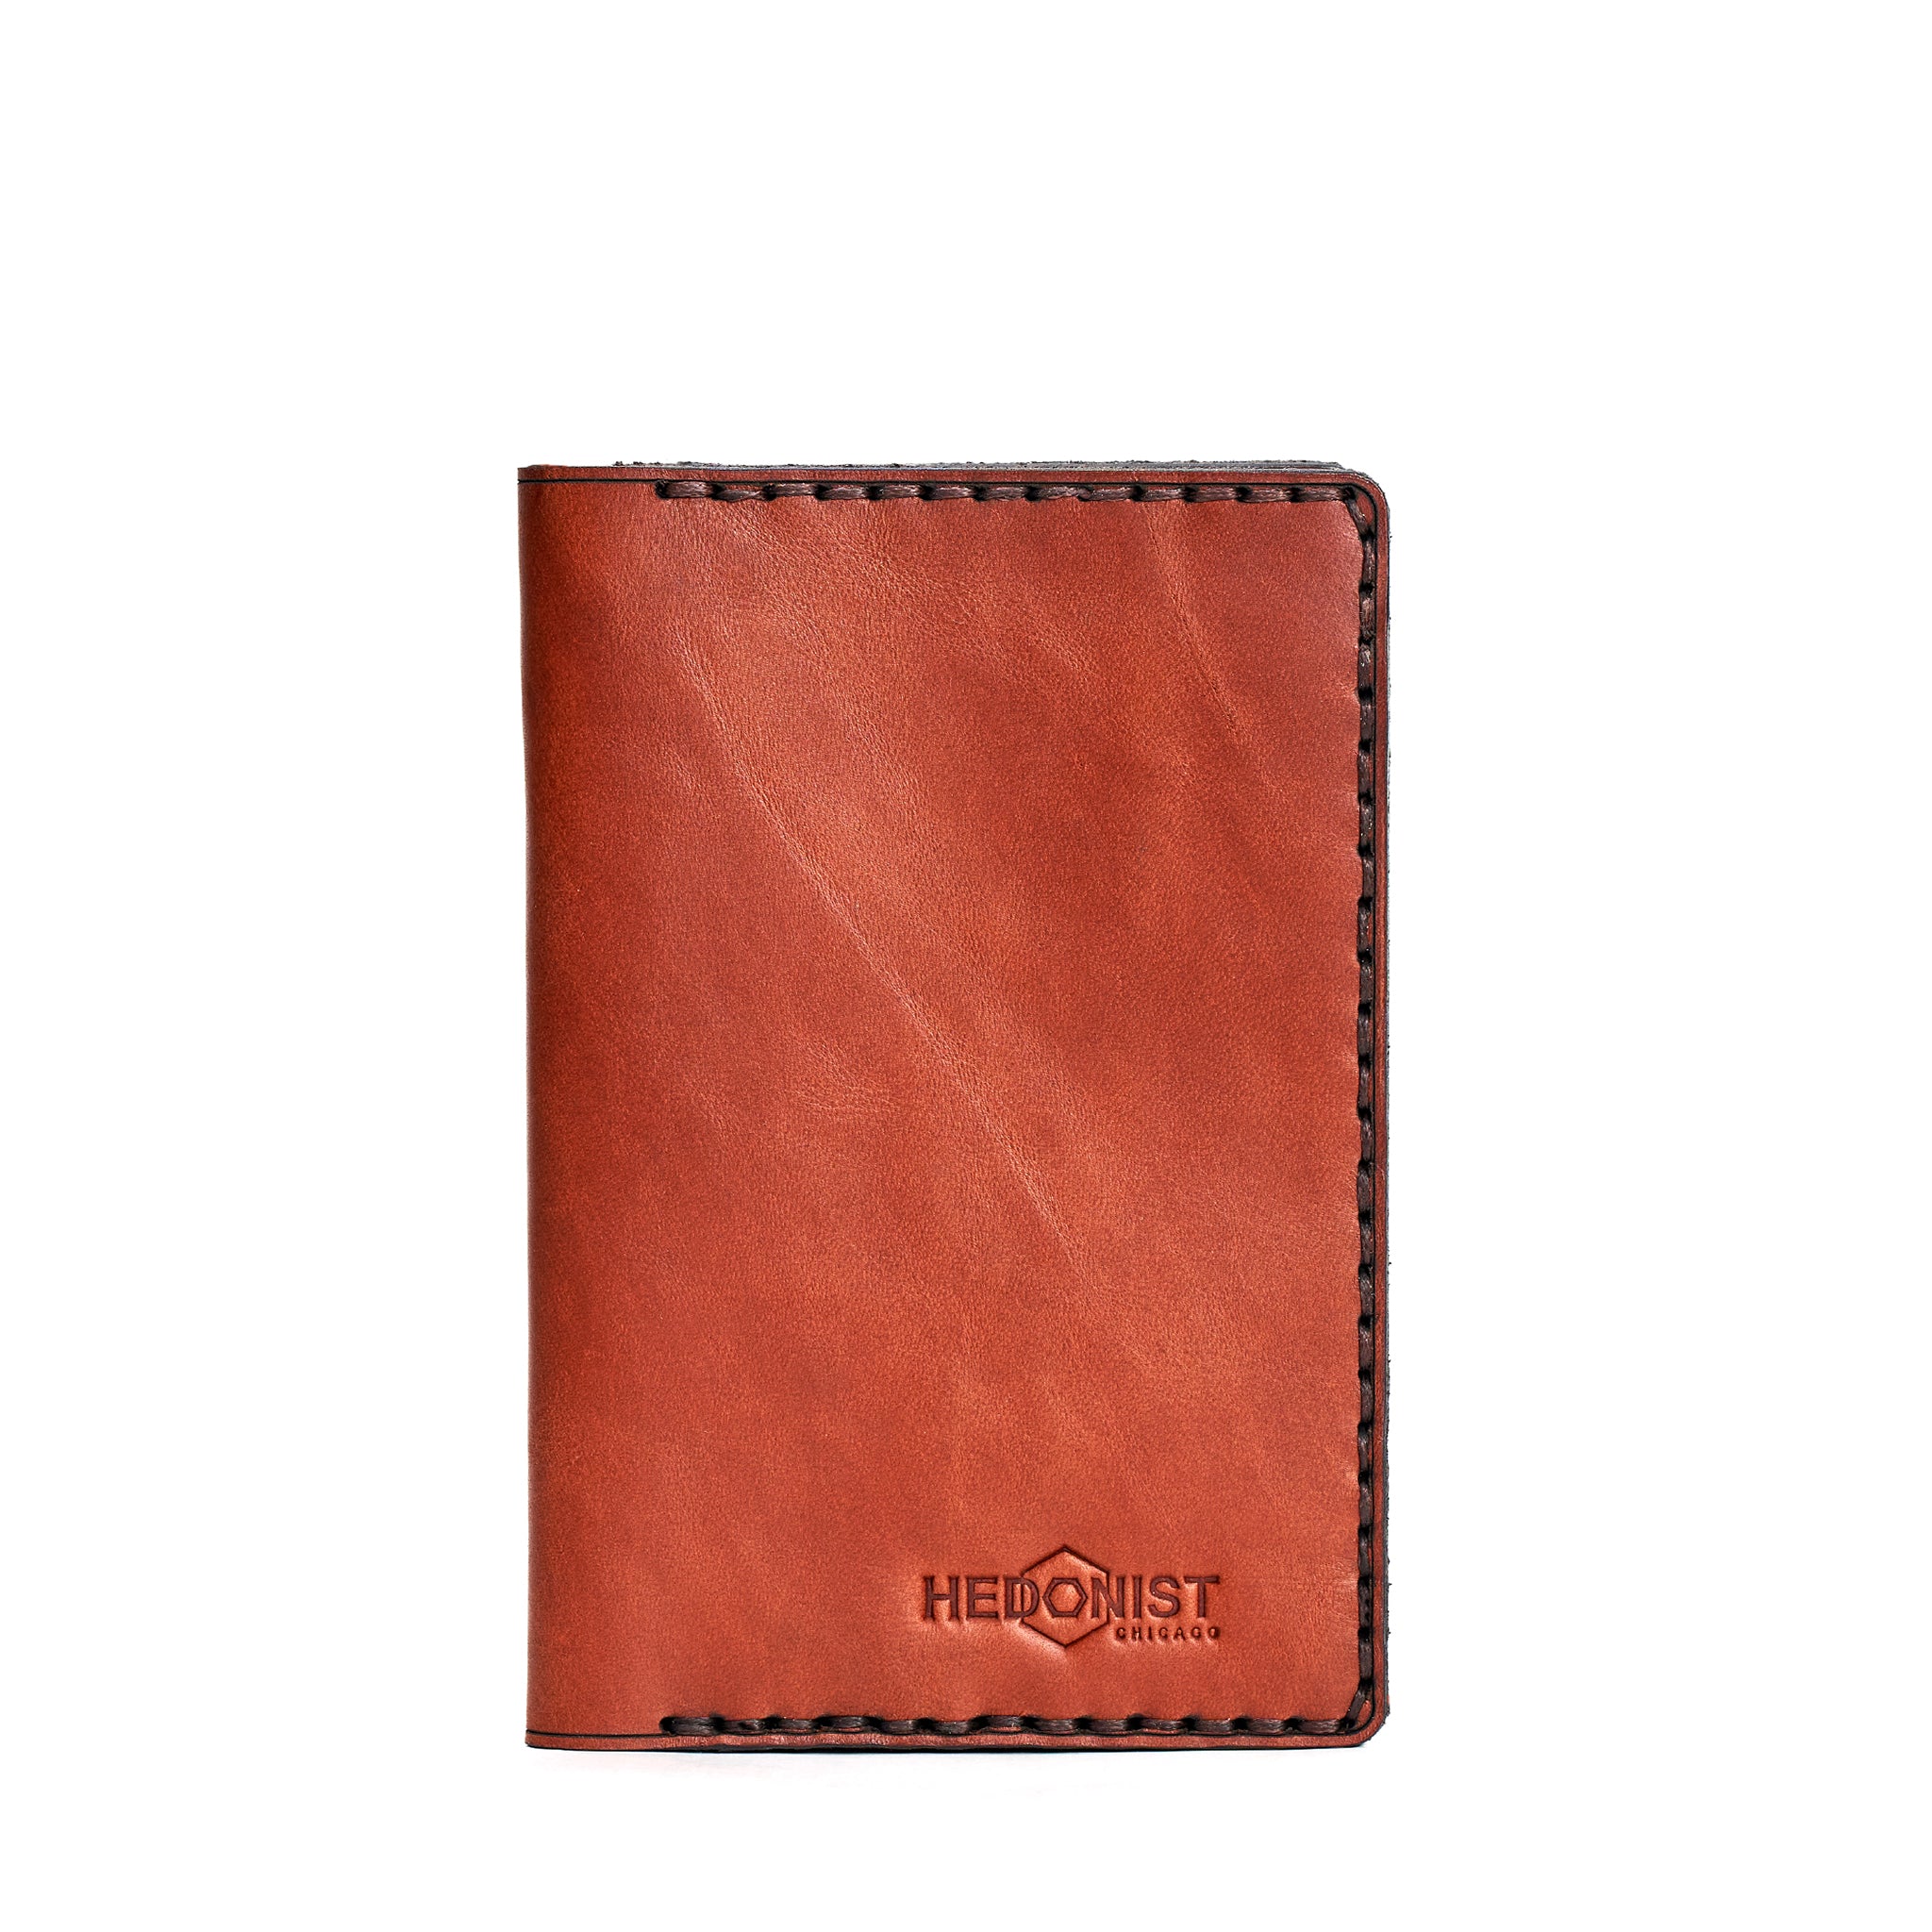 Handmade Leather Passport Case Red Brick 31707643183255